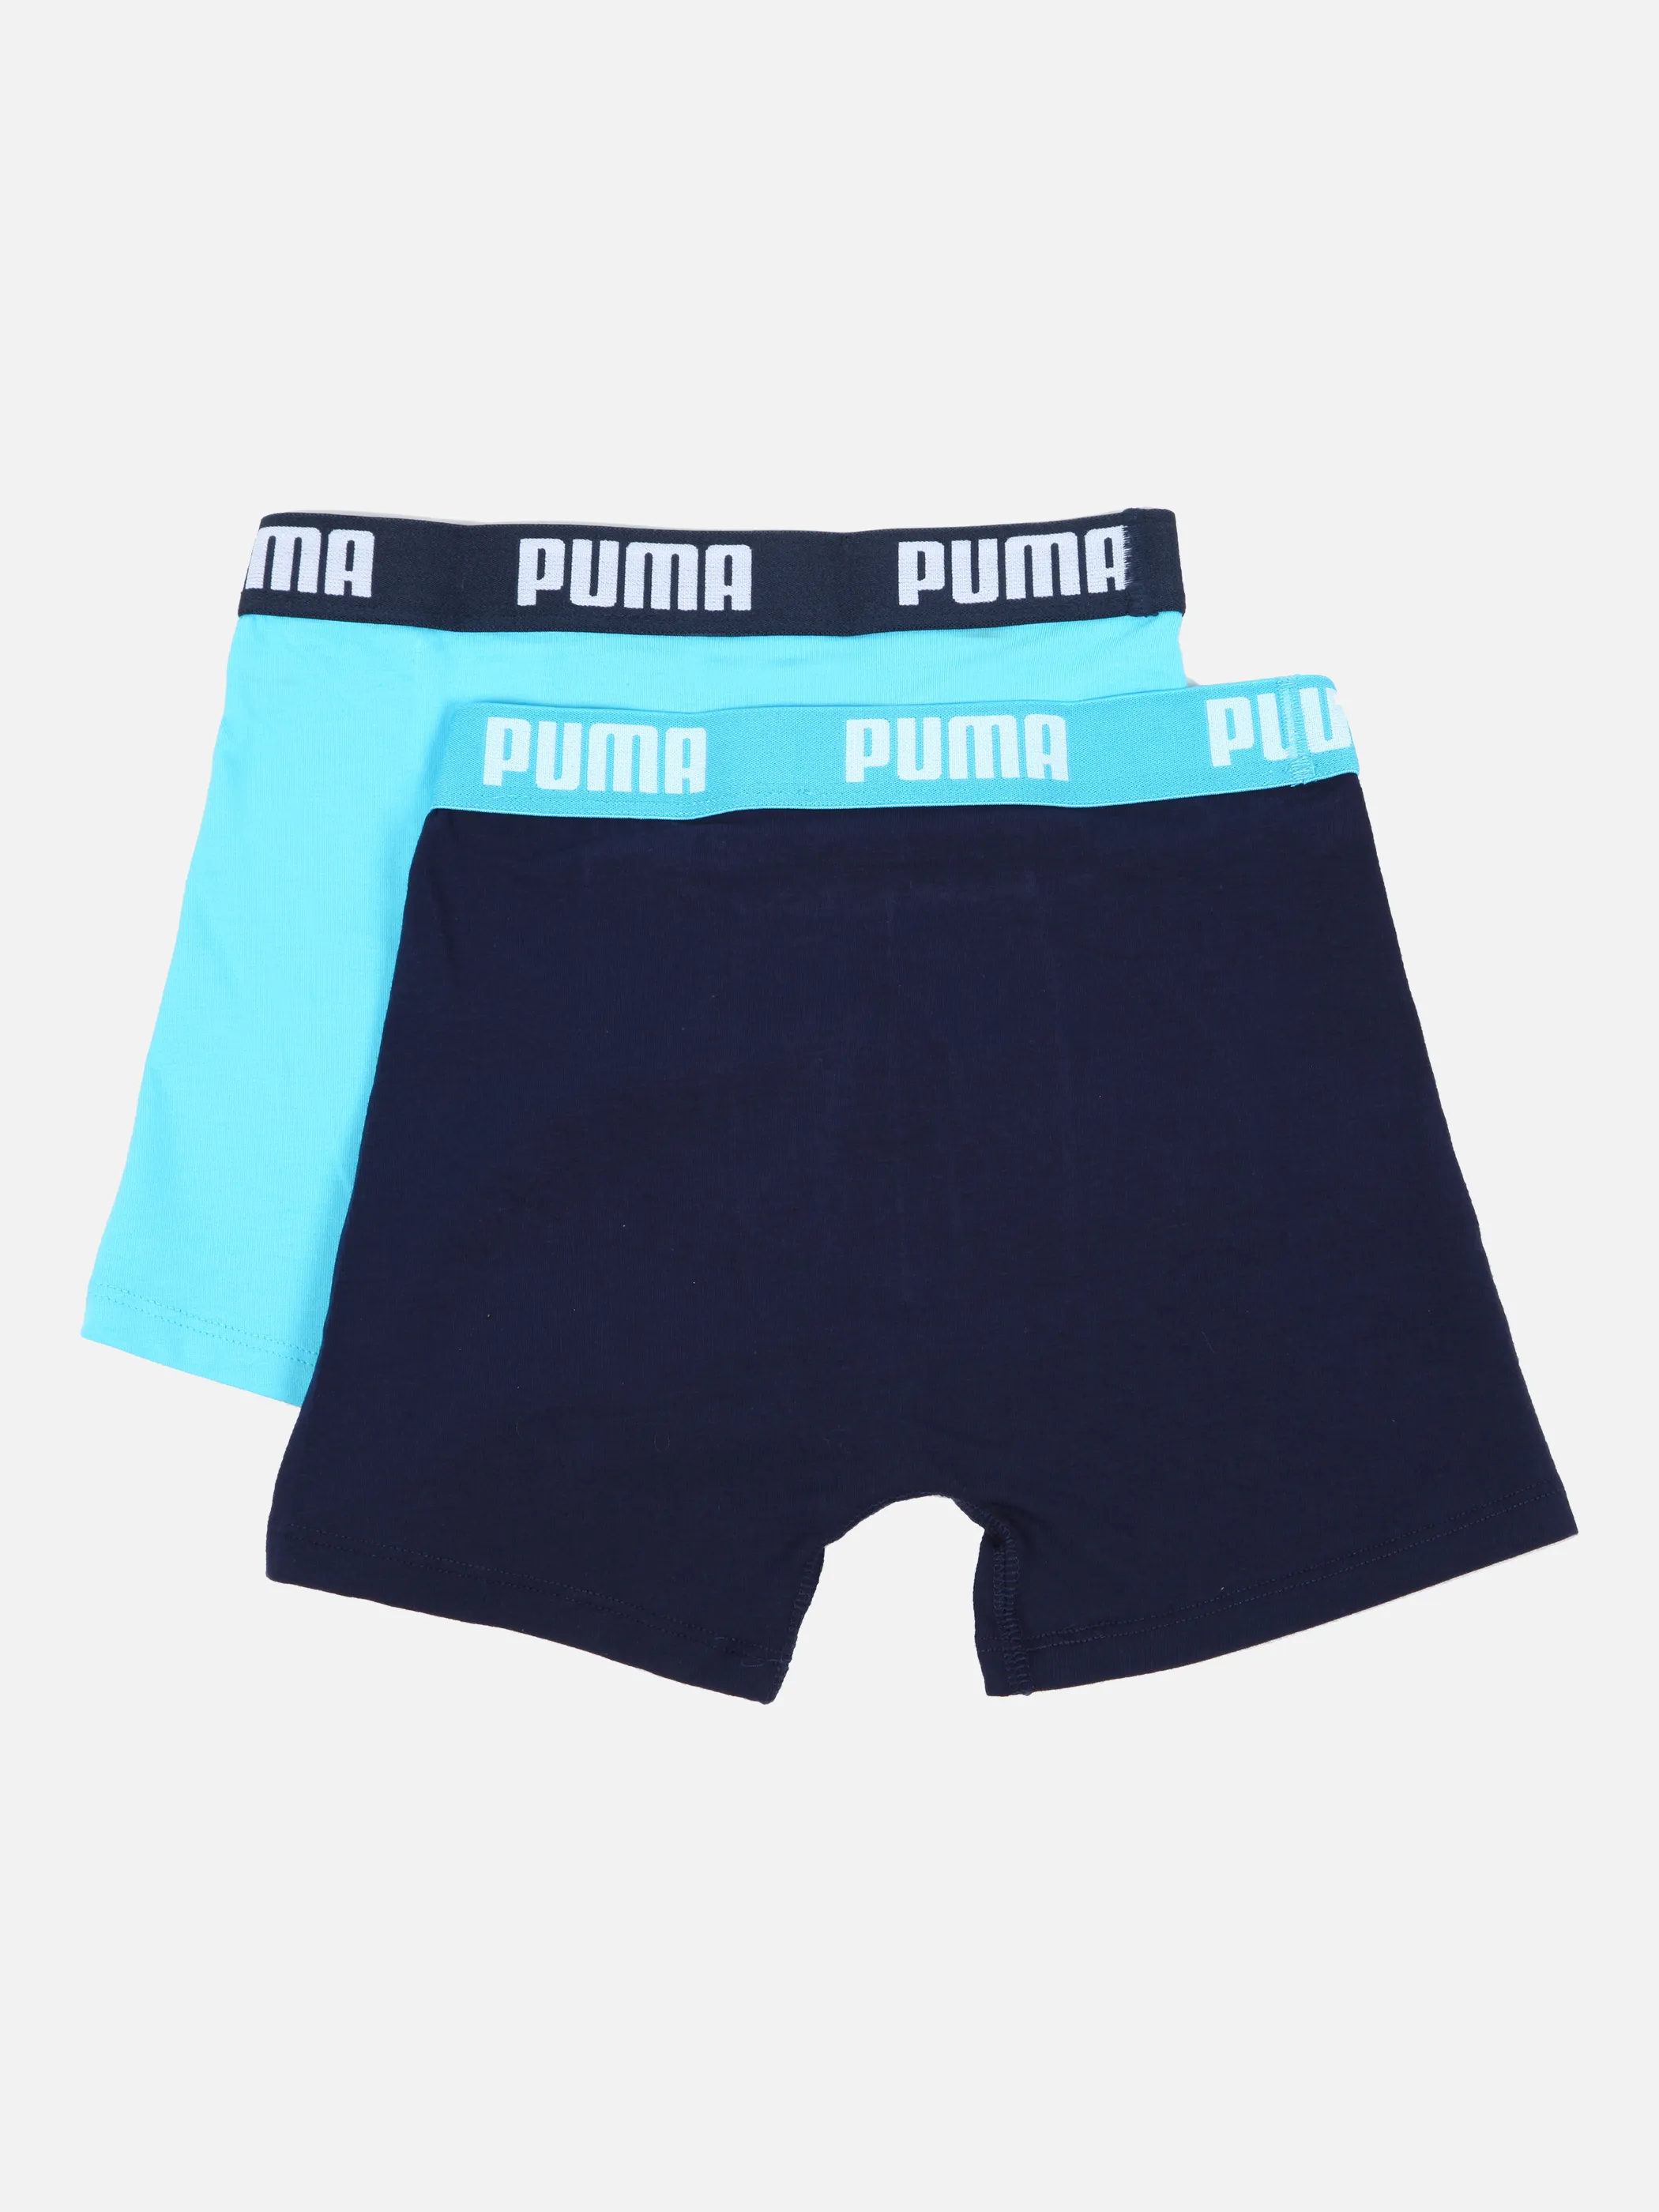 Puma Kn-PUMA BASIC BOXER 2er Pack Blau 834192 789 2